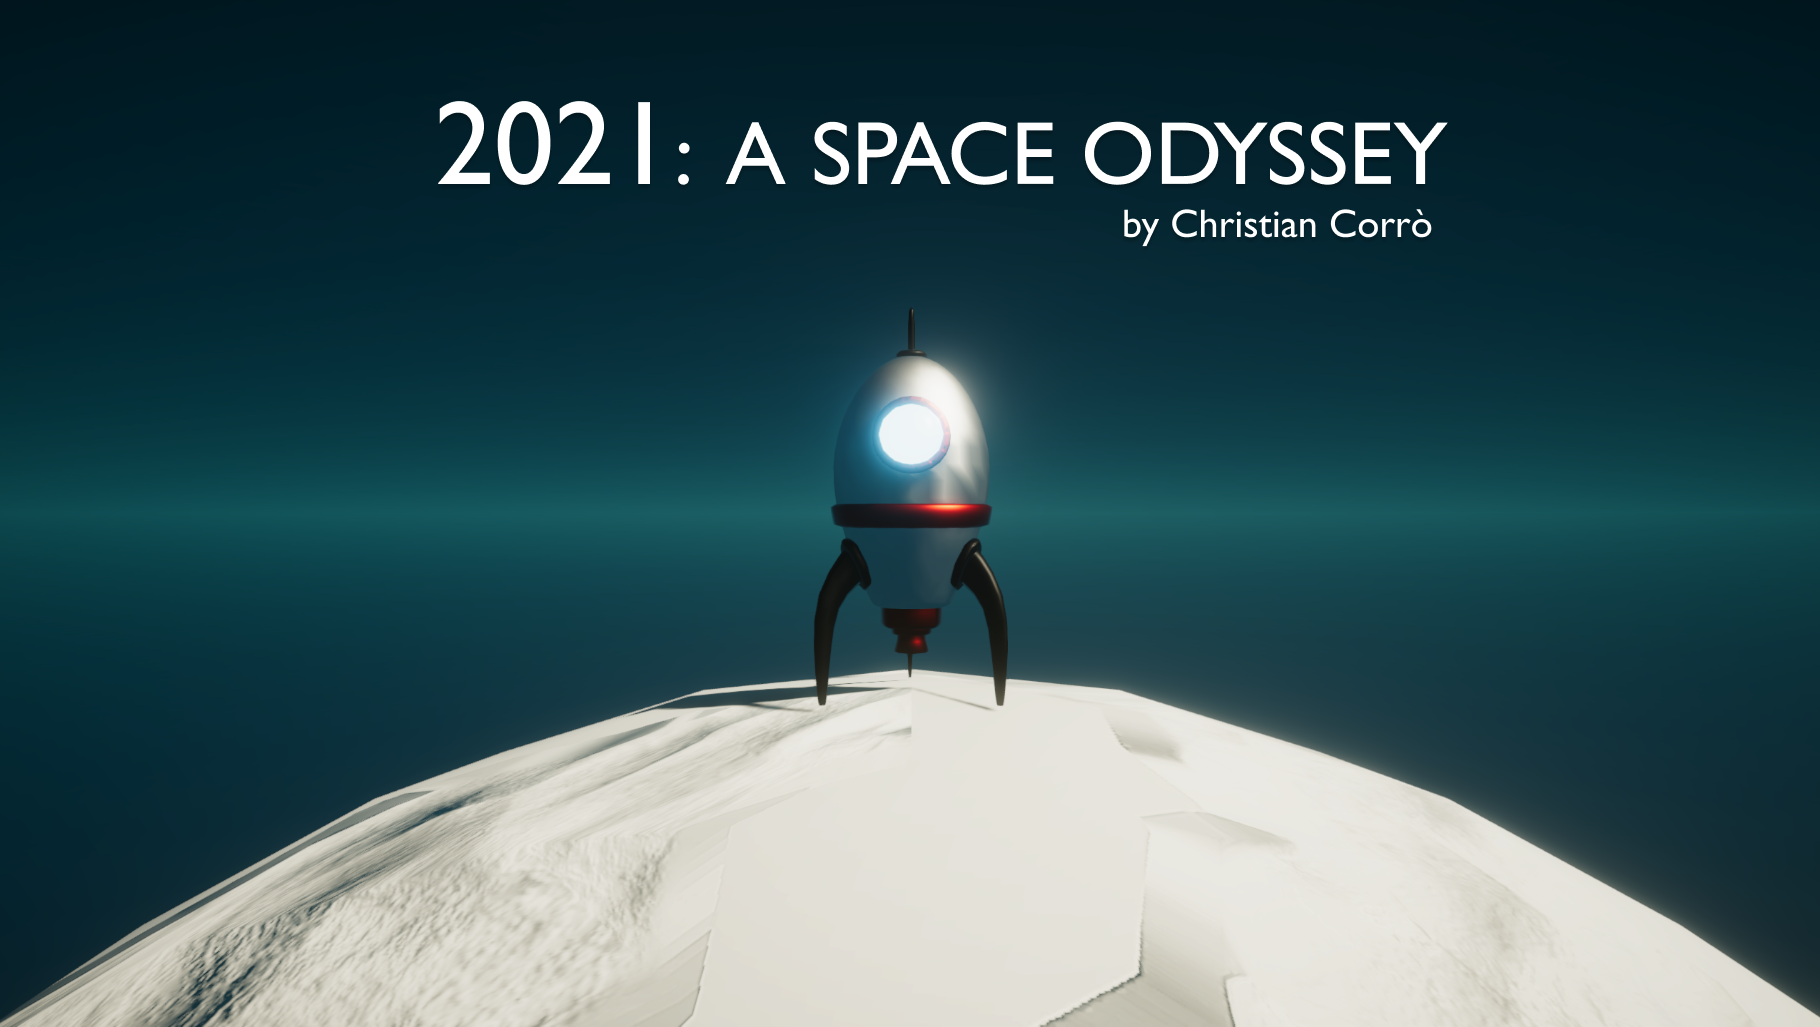 2021: A space odyssey